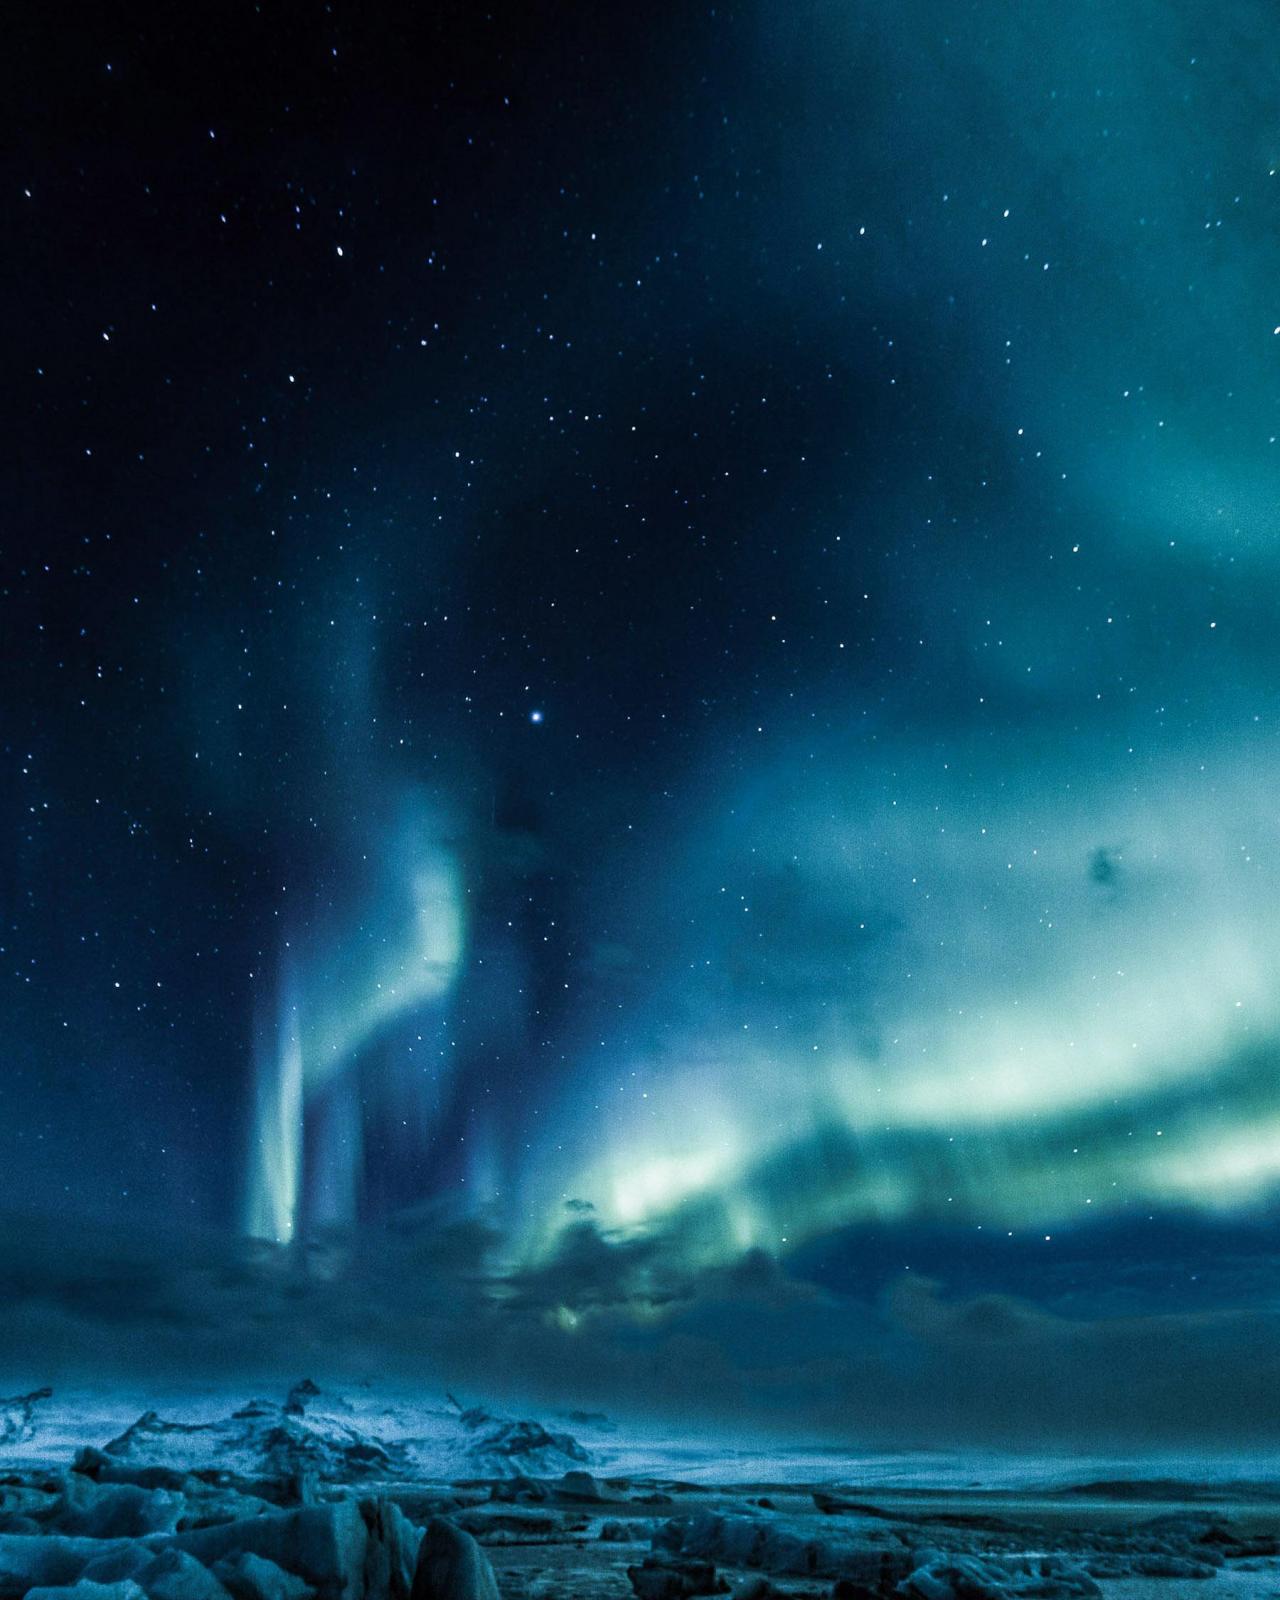 amazinglybeautifulphotography:
?Aurora Borealis over the J?kuls?rl?n Ice Lagoon in Iceland [1800x2250] [OC] - Author: jetclarke on reddit
?